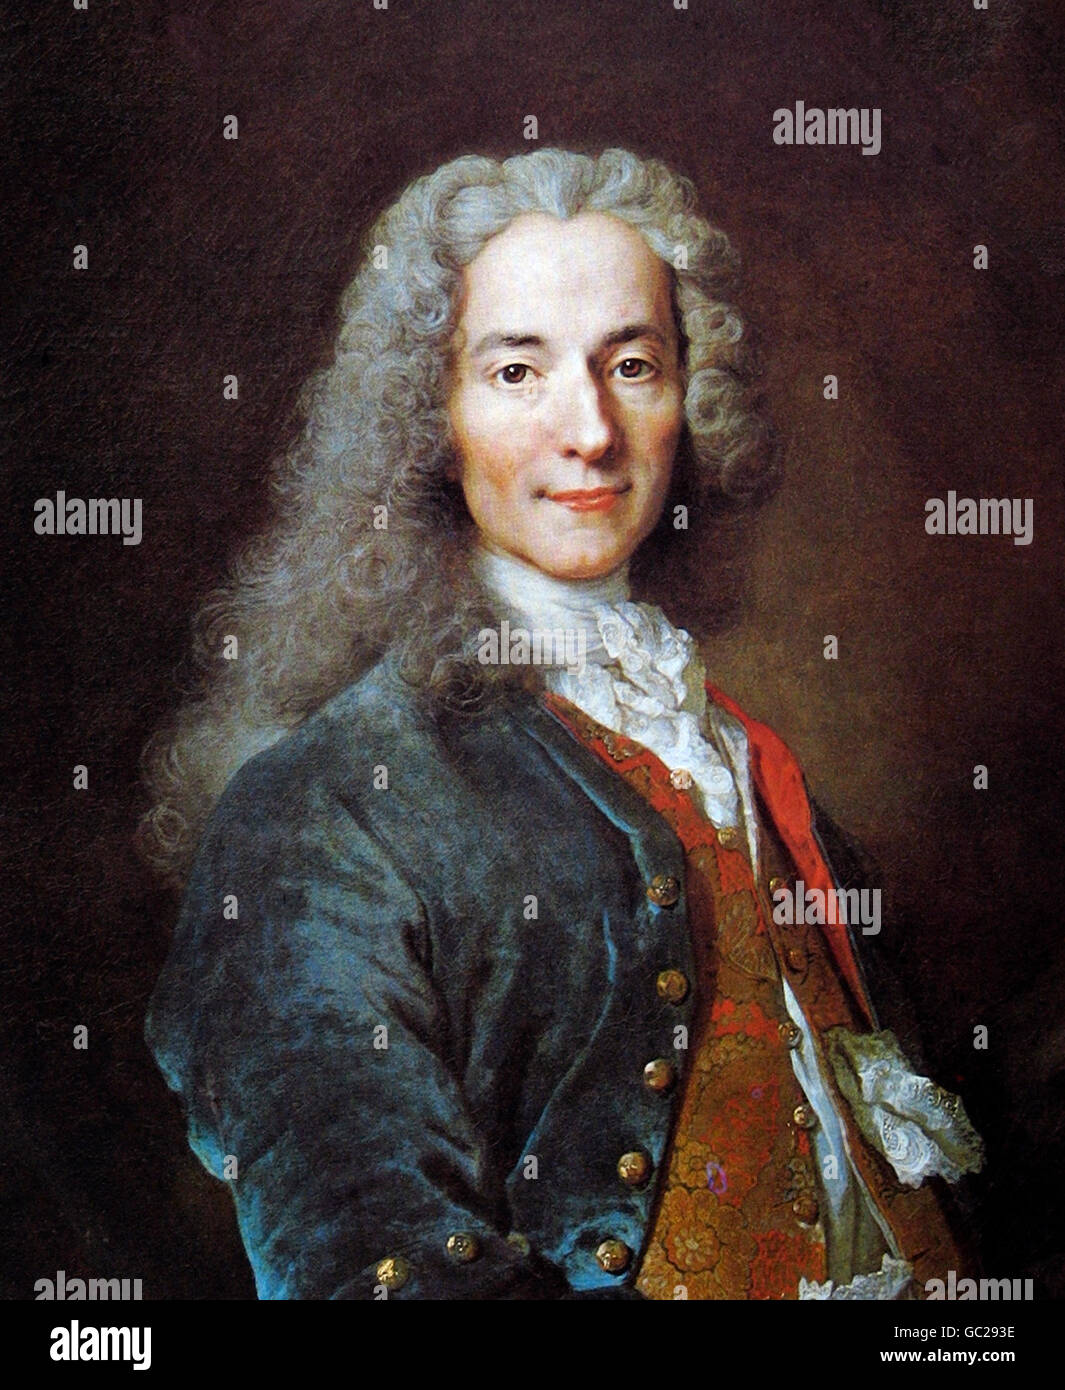 Voltaire. Portrait of the French Enlightenment writer and philosopher, Voltaire (François-Marie Arouet: 1694-1778), by Nicolas de Largillierre, oil on canvas, c.1724-1725 Stock Photo